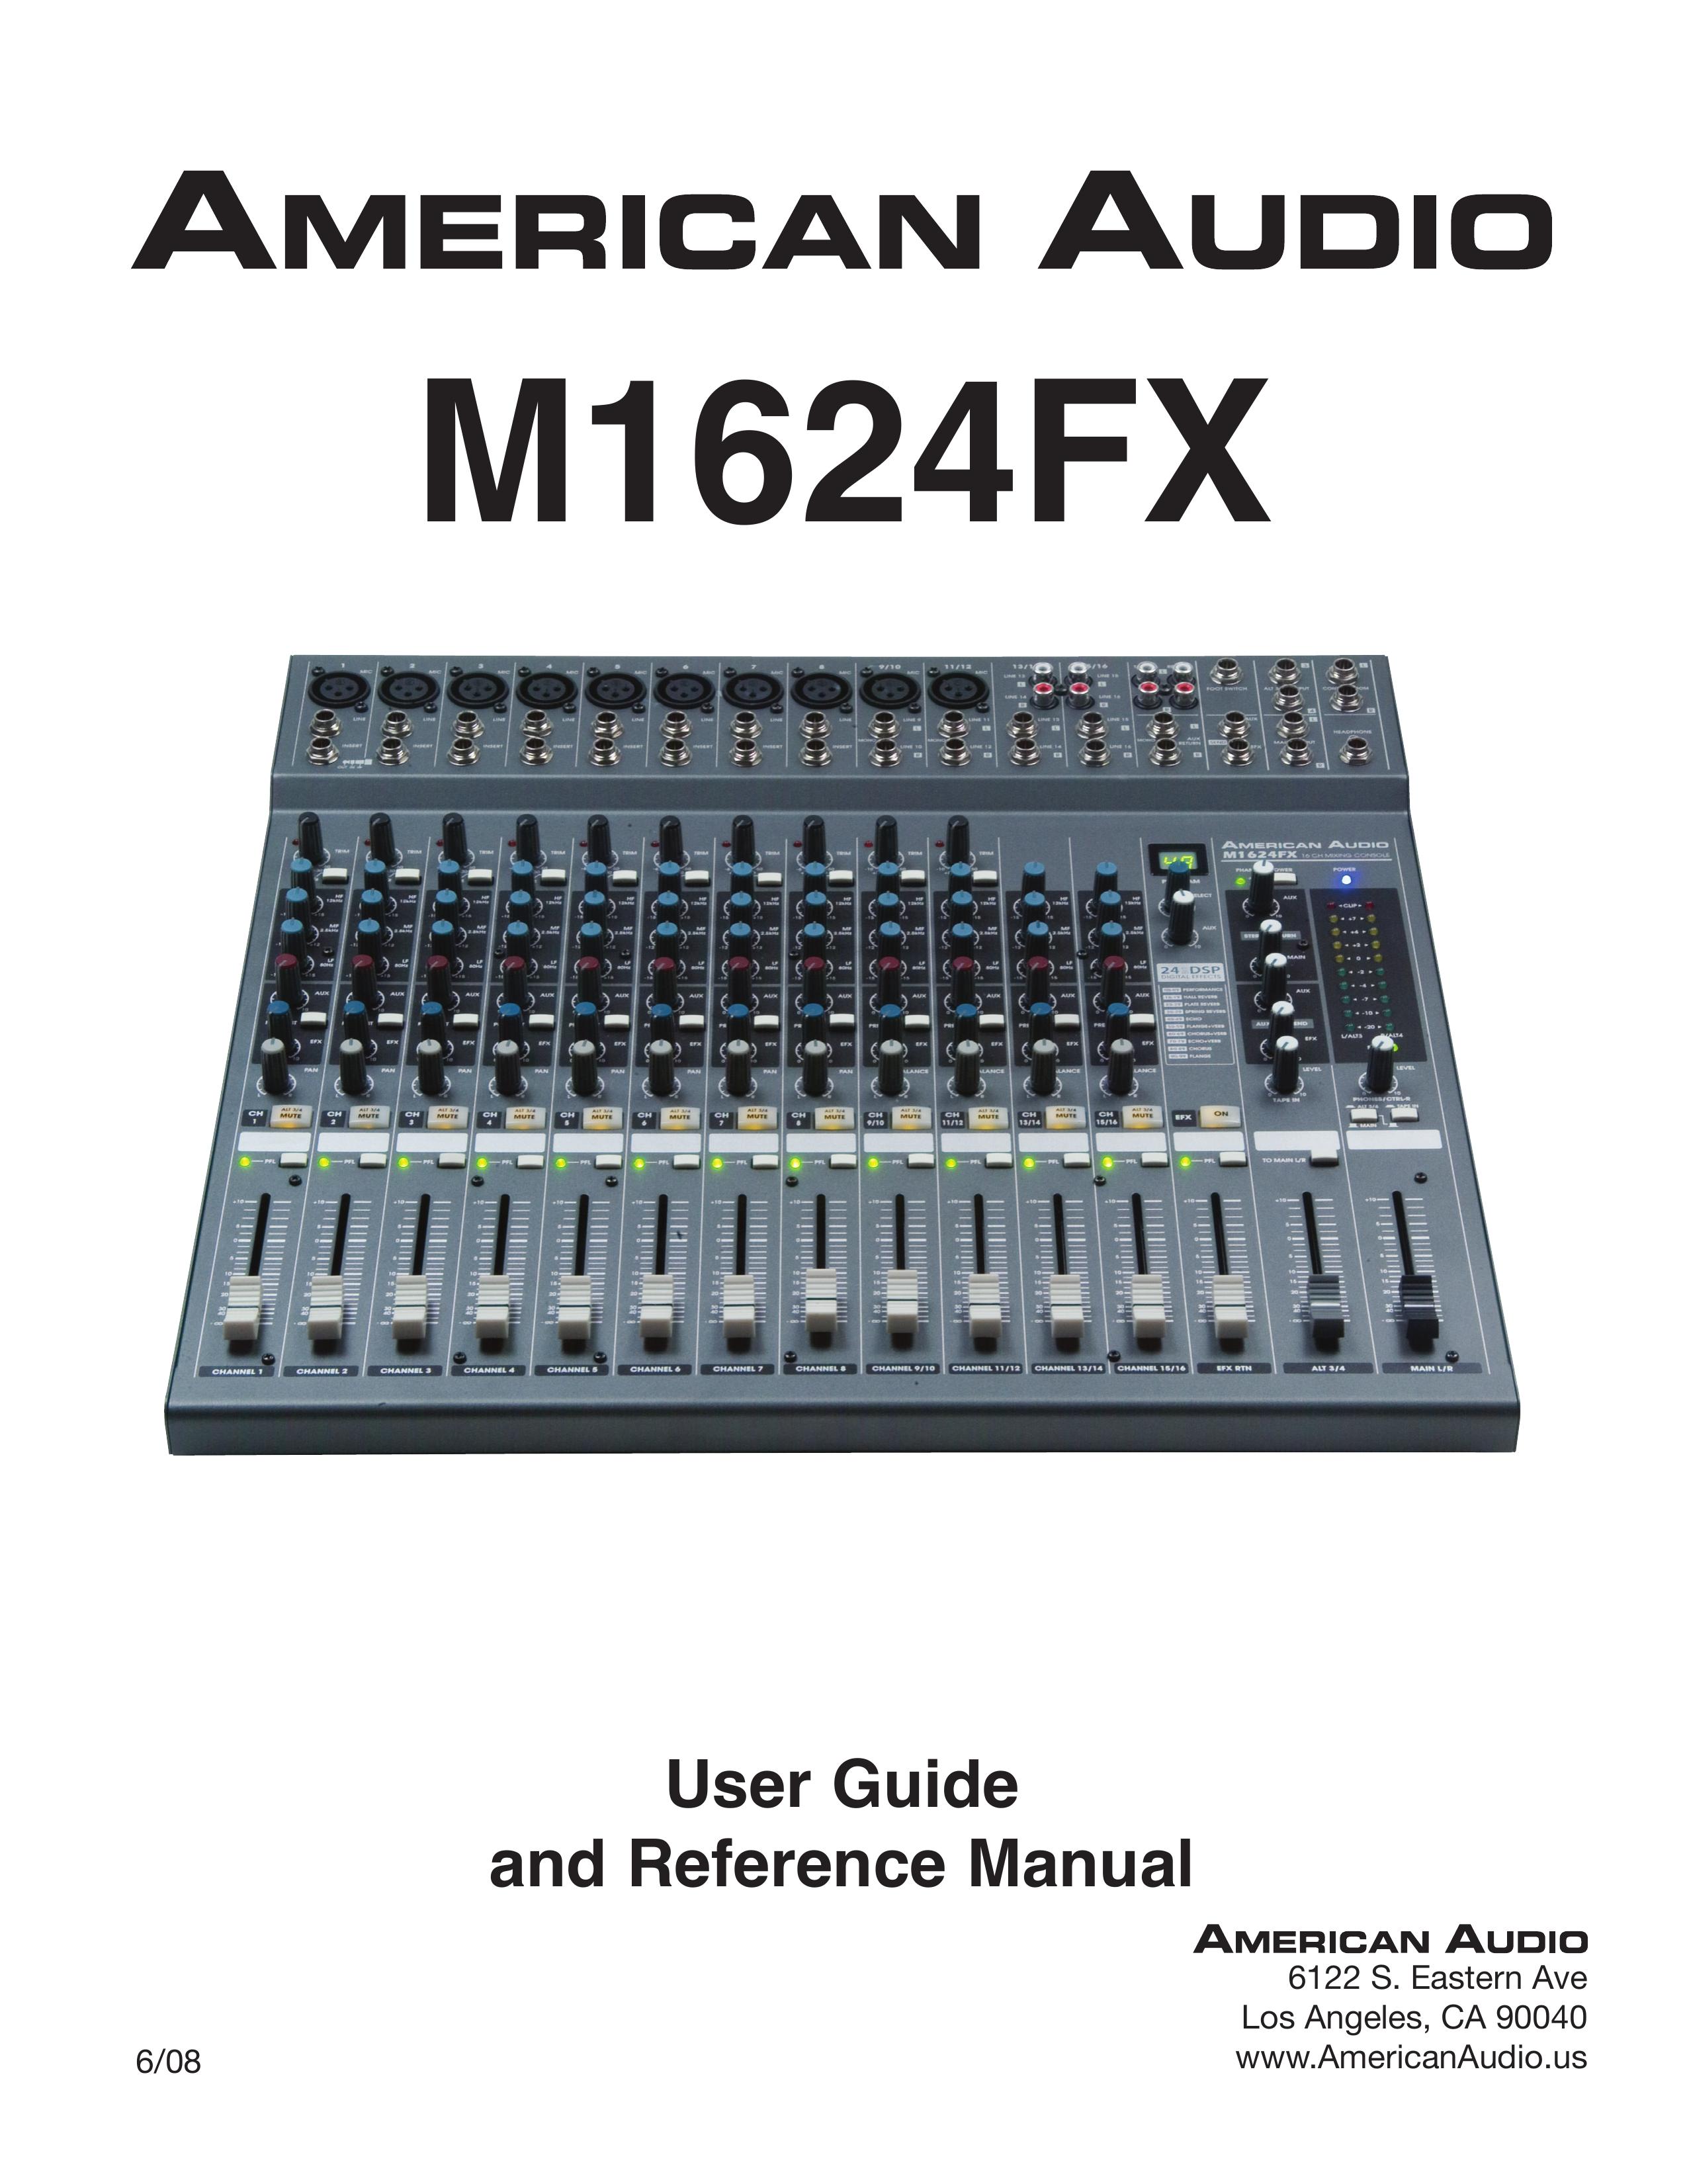 American Audio M1624FX Music Mixer User Manual